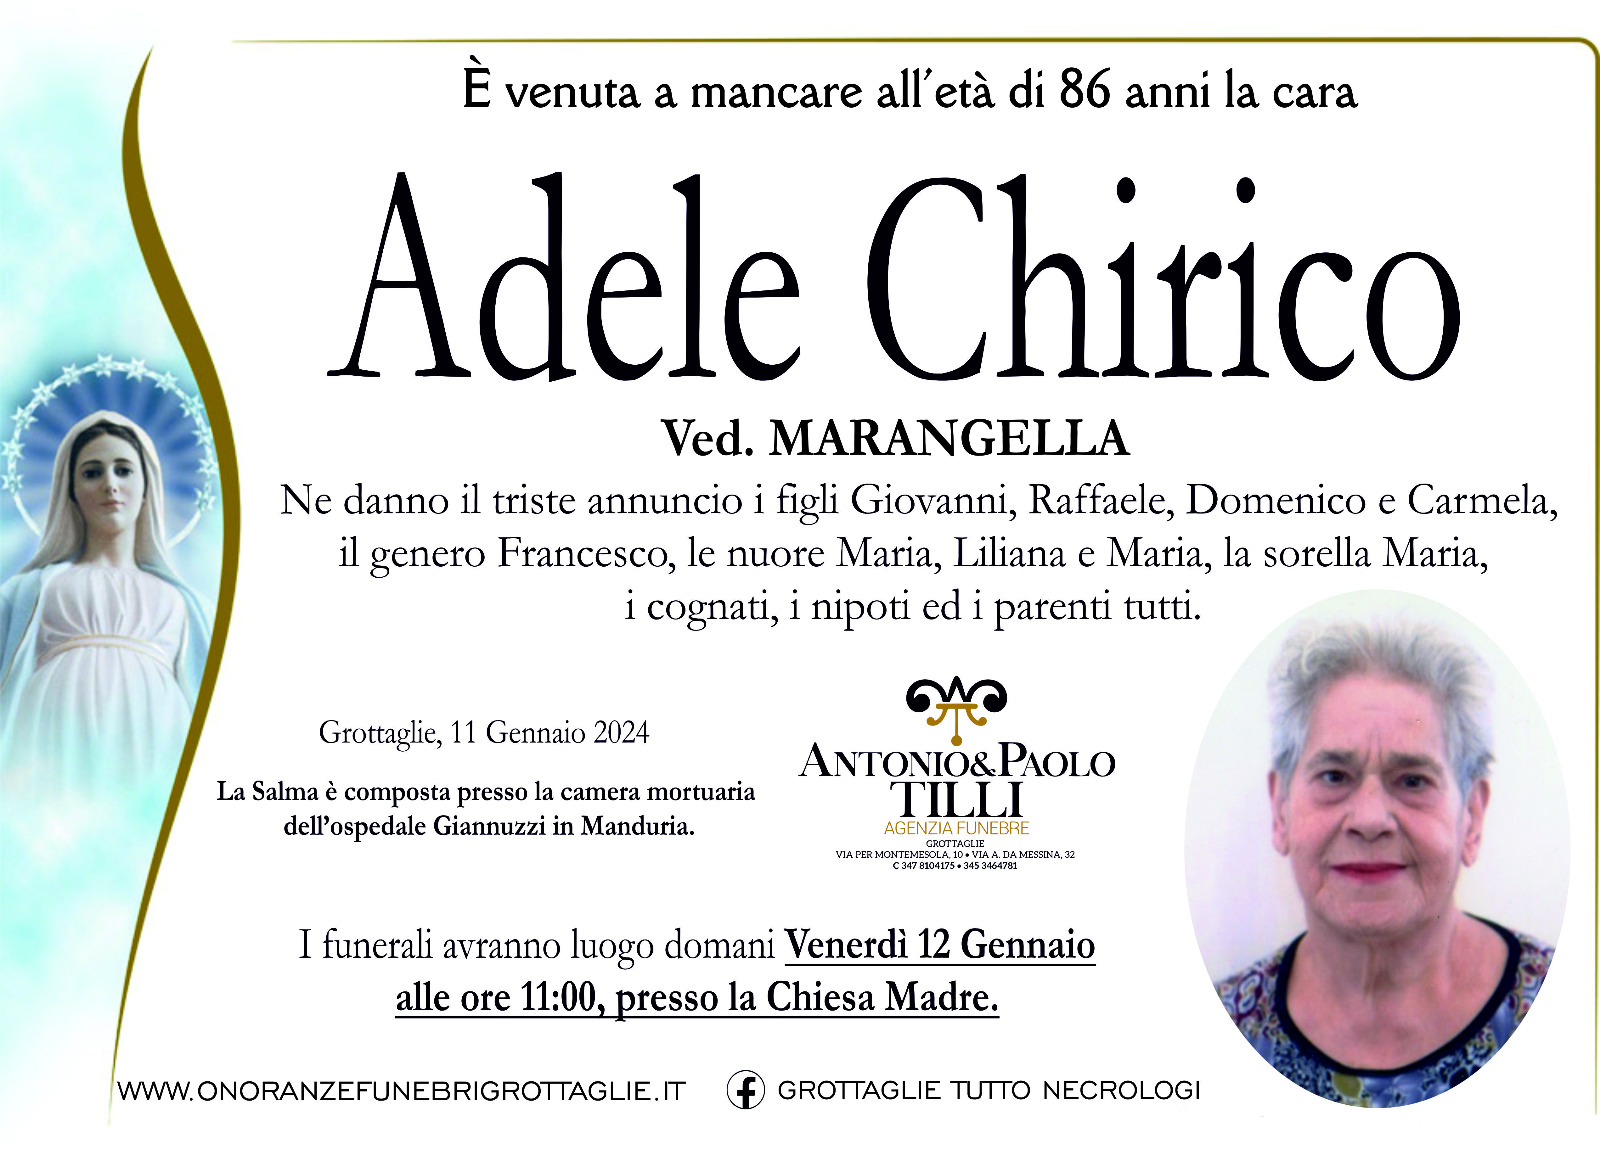 Adele Chirico